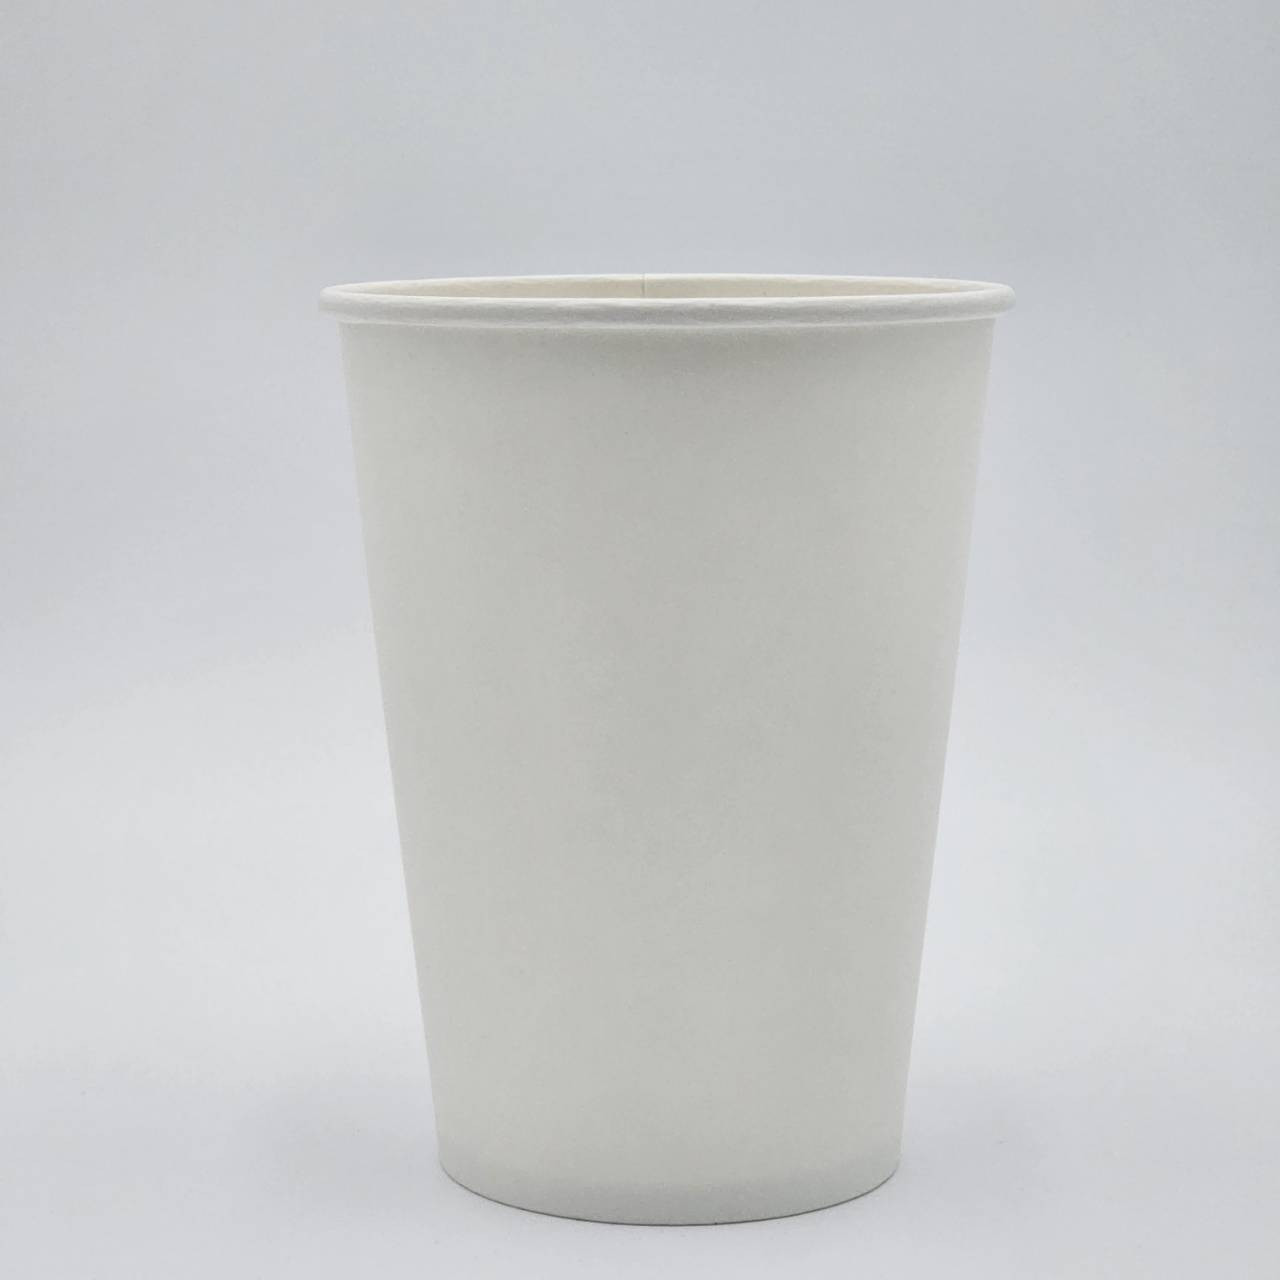 32oz Soup Cup - Non-Printed Series White